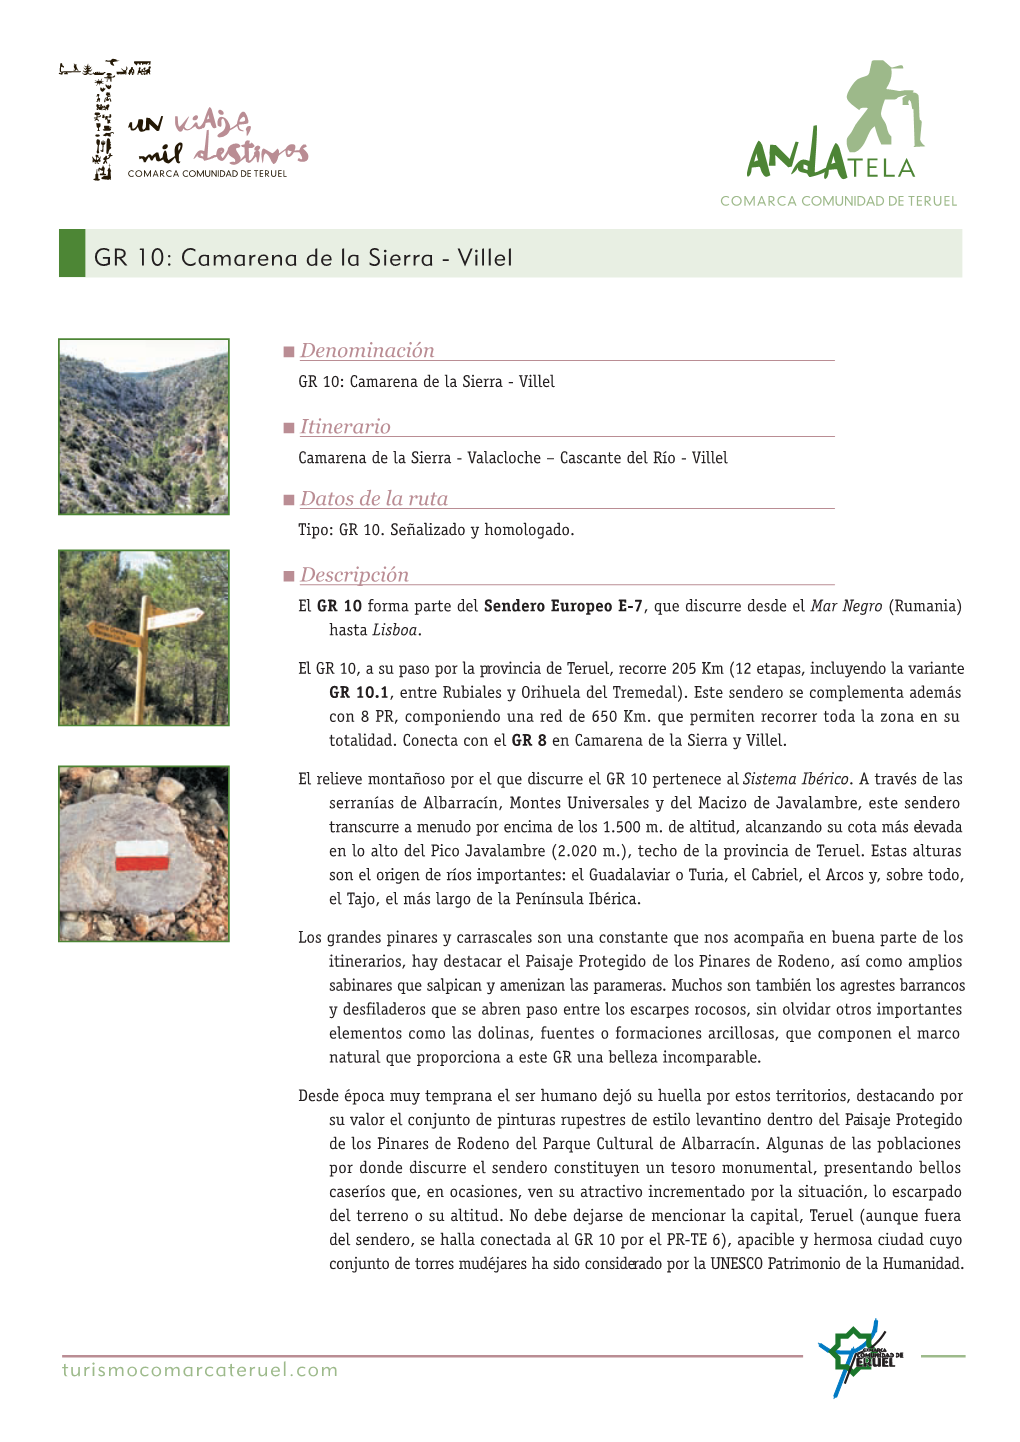 GR 10: Camarena De La Sierra - Villel